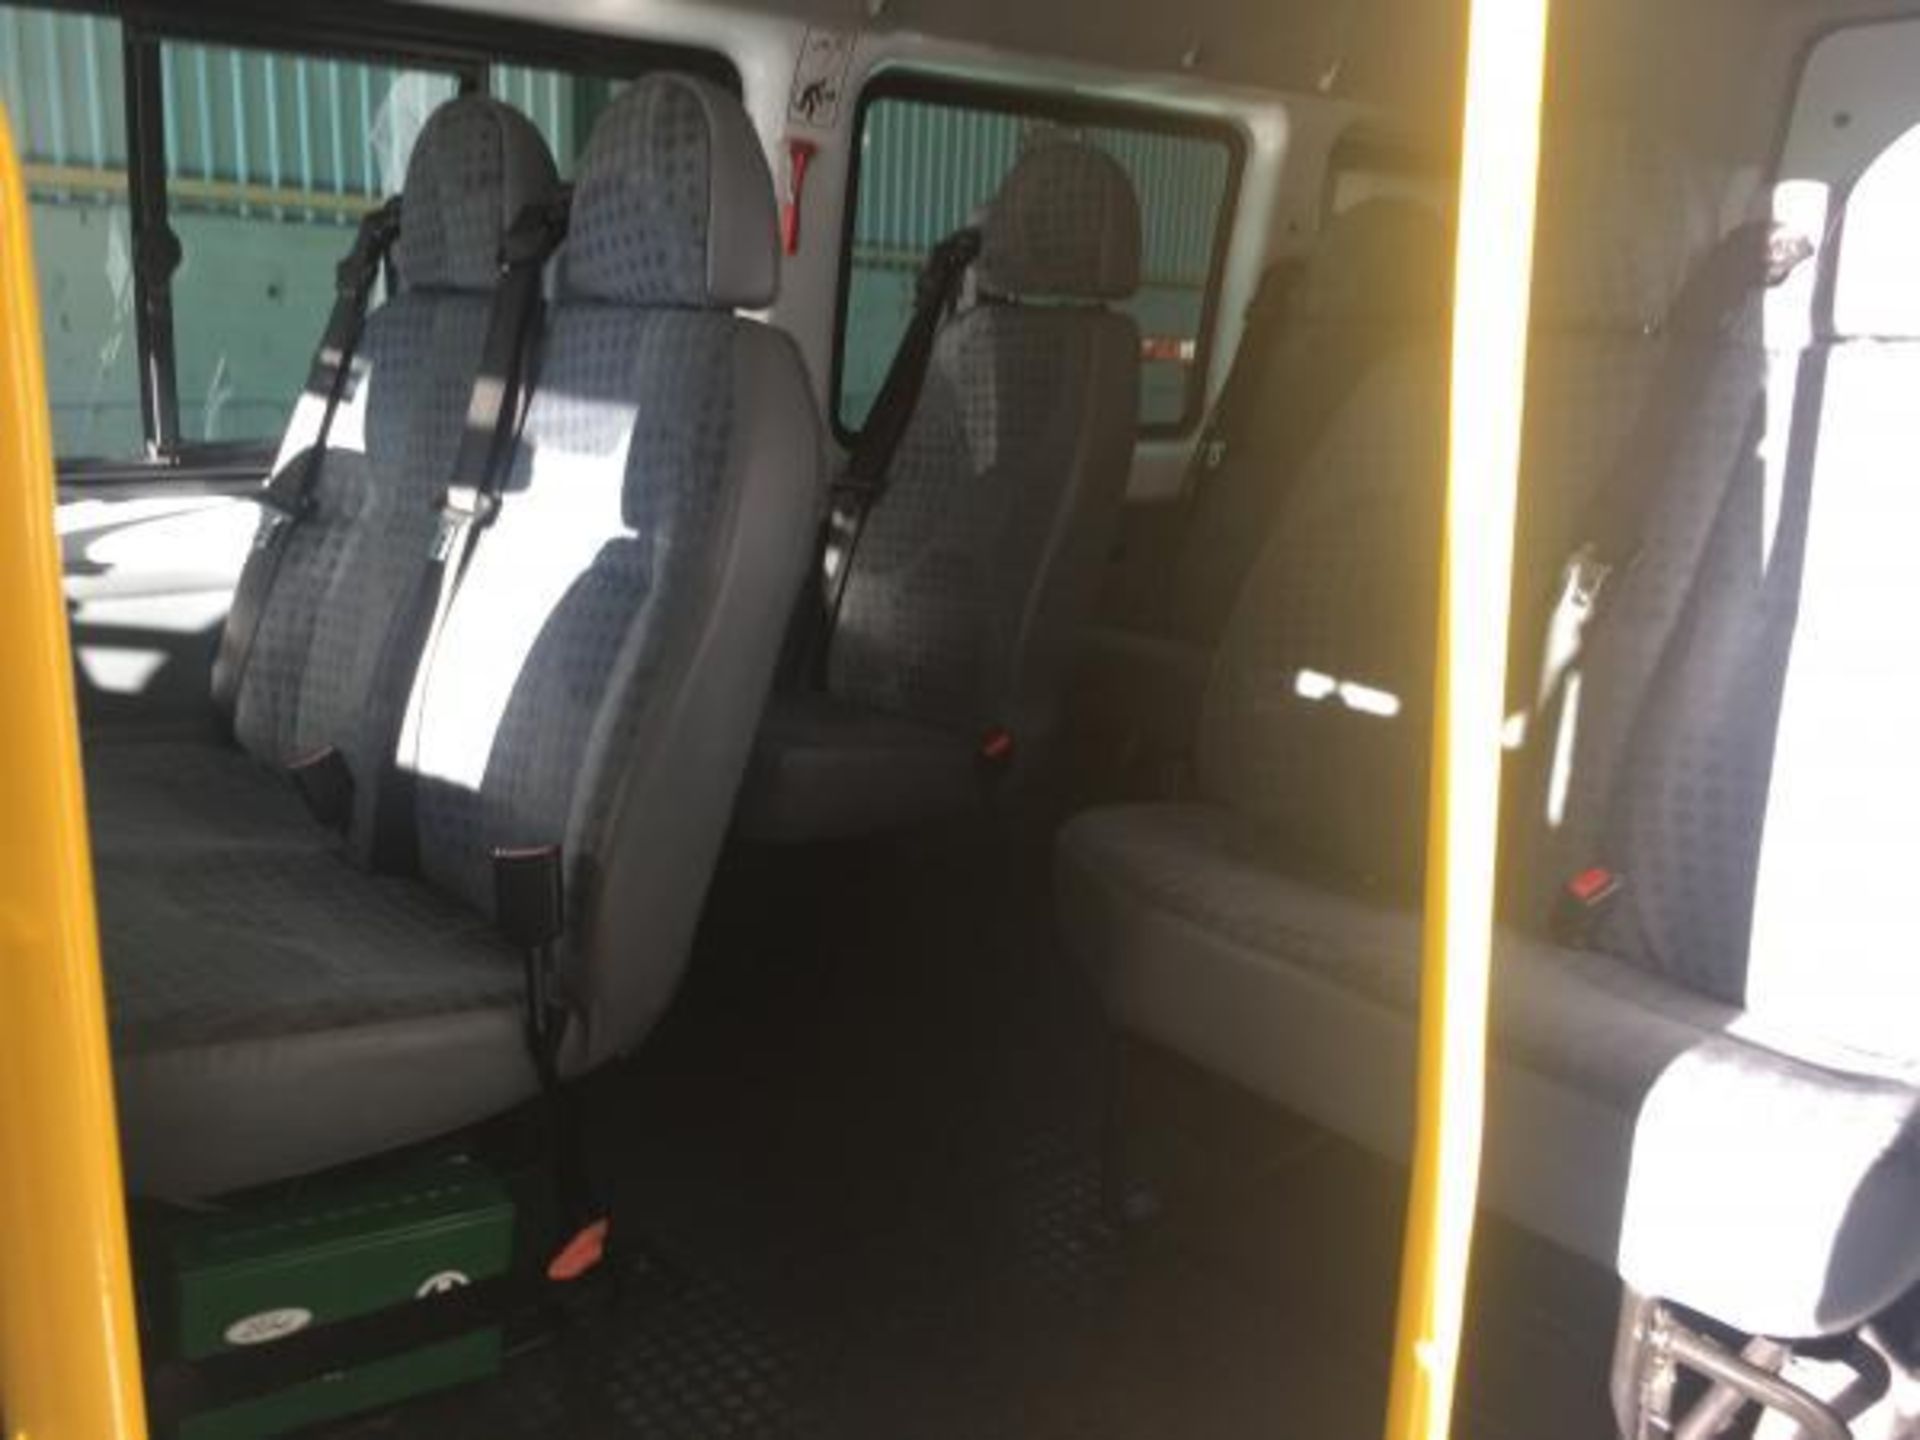 2013/13 REG FORD TRANSIT 135 T430 RWD WHITE DIESEL 17 SEAT MINIBUS EURO 5 WITH AIR CON *PLUS VAT* - Image 13 of 15